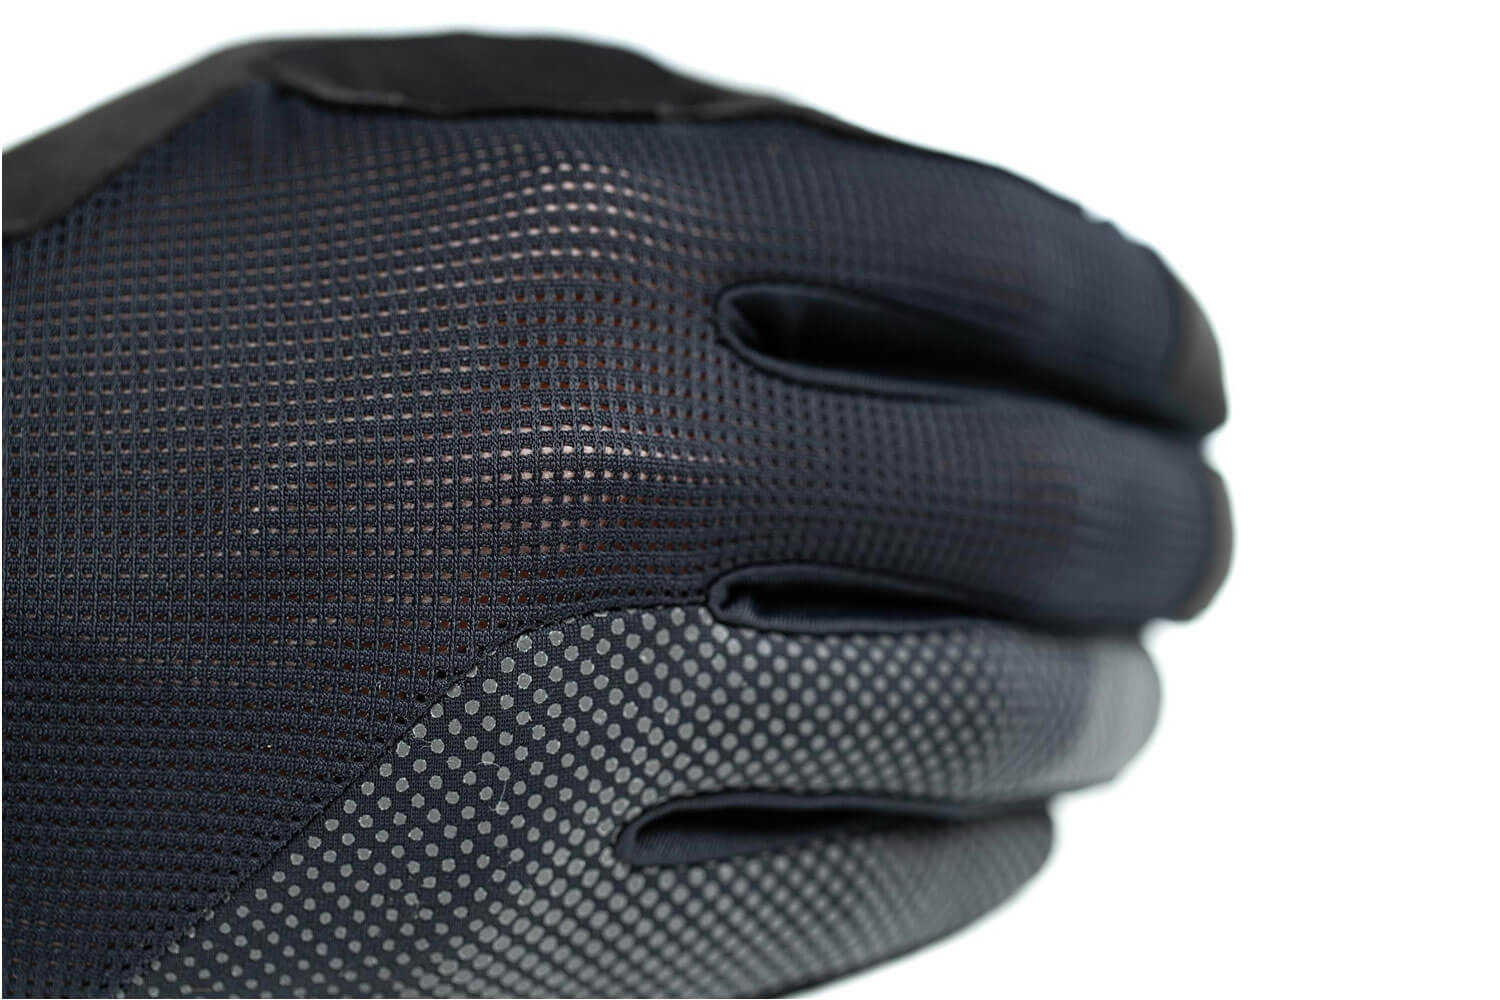 Cube CMPT COMFORT Langfinger Handschuhe  